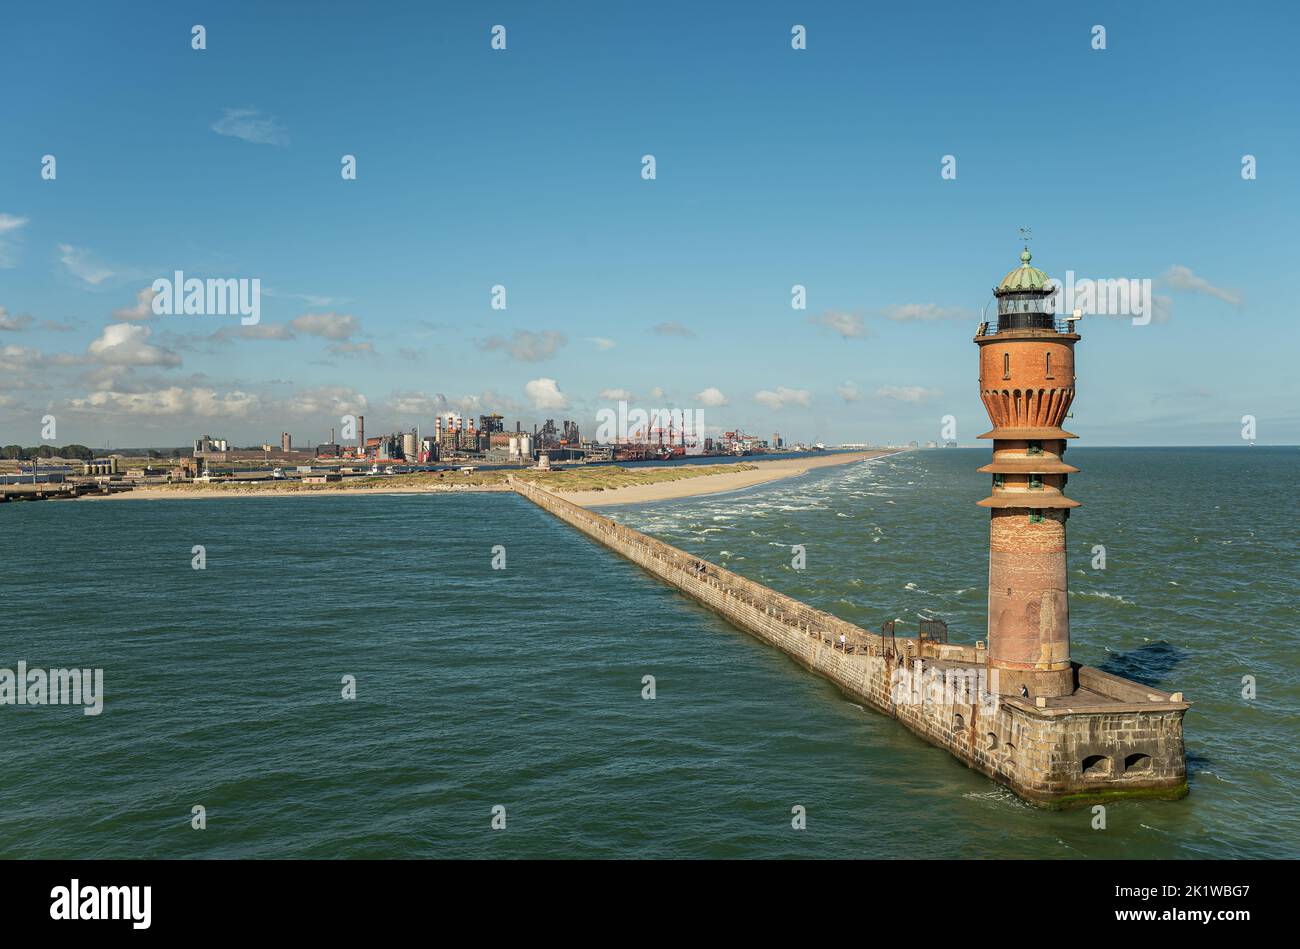 Europe, France, Dunkerque - July 9, 2022: Landscape, Feu de Saint Pol light tower on its pier at entrance to port under blue sky. Power generation fac Stock Photo